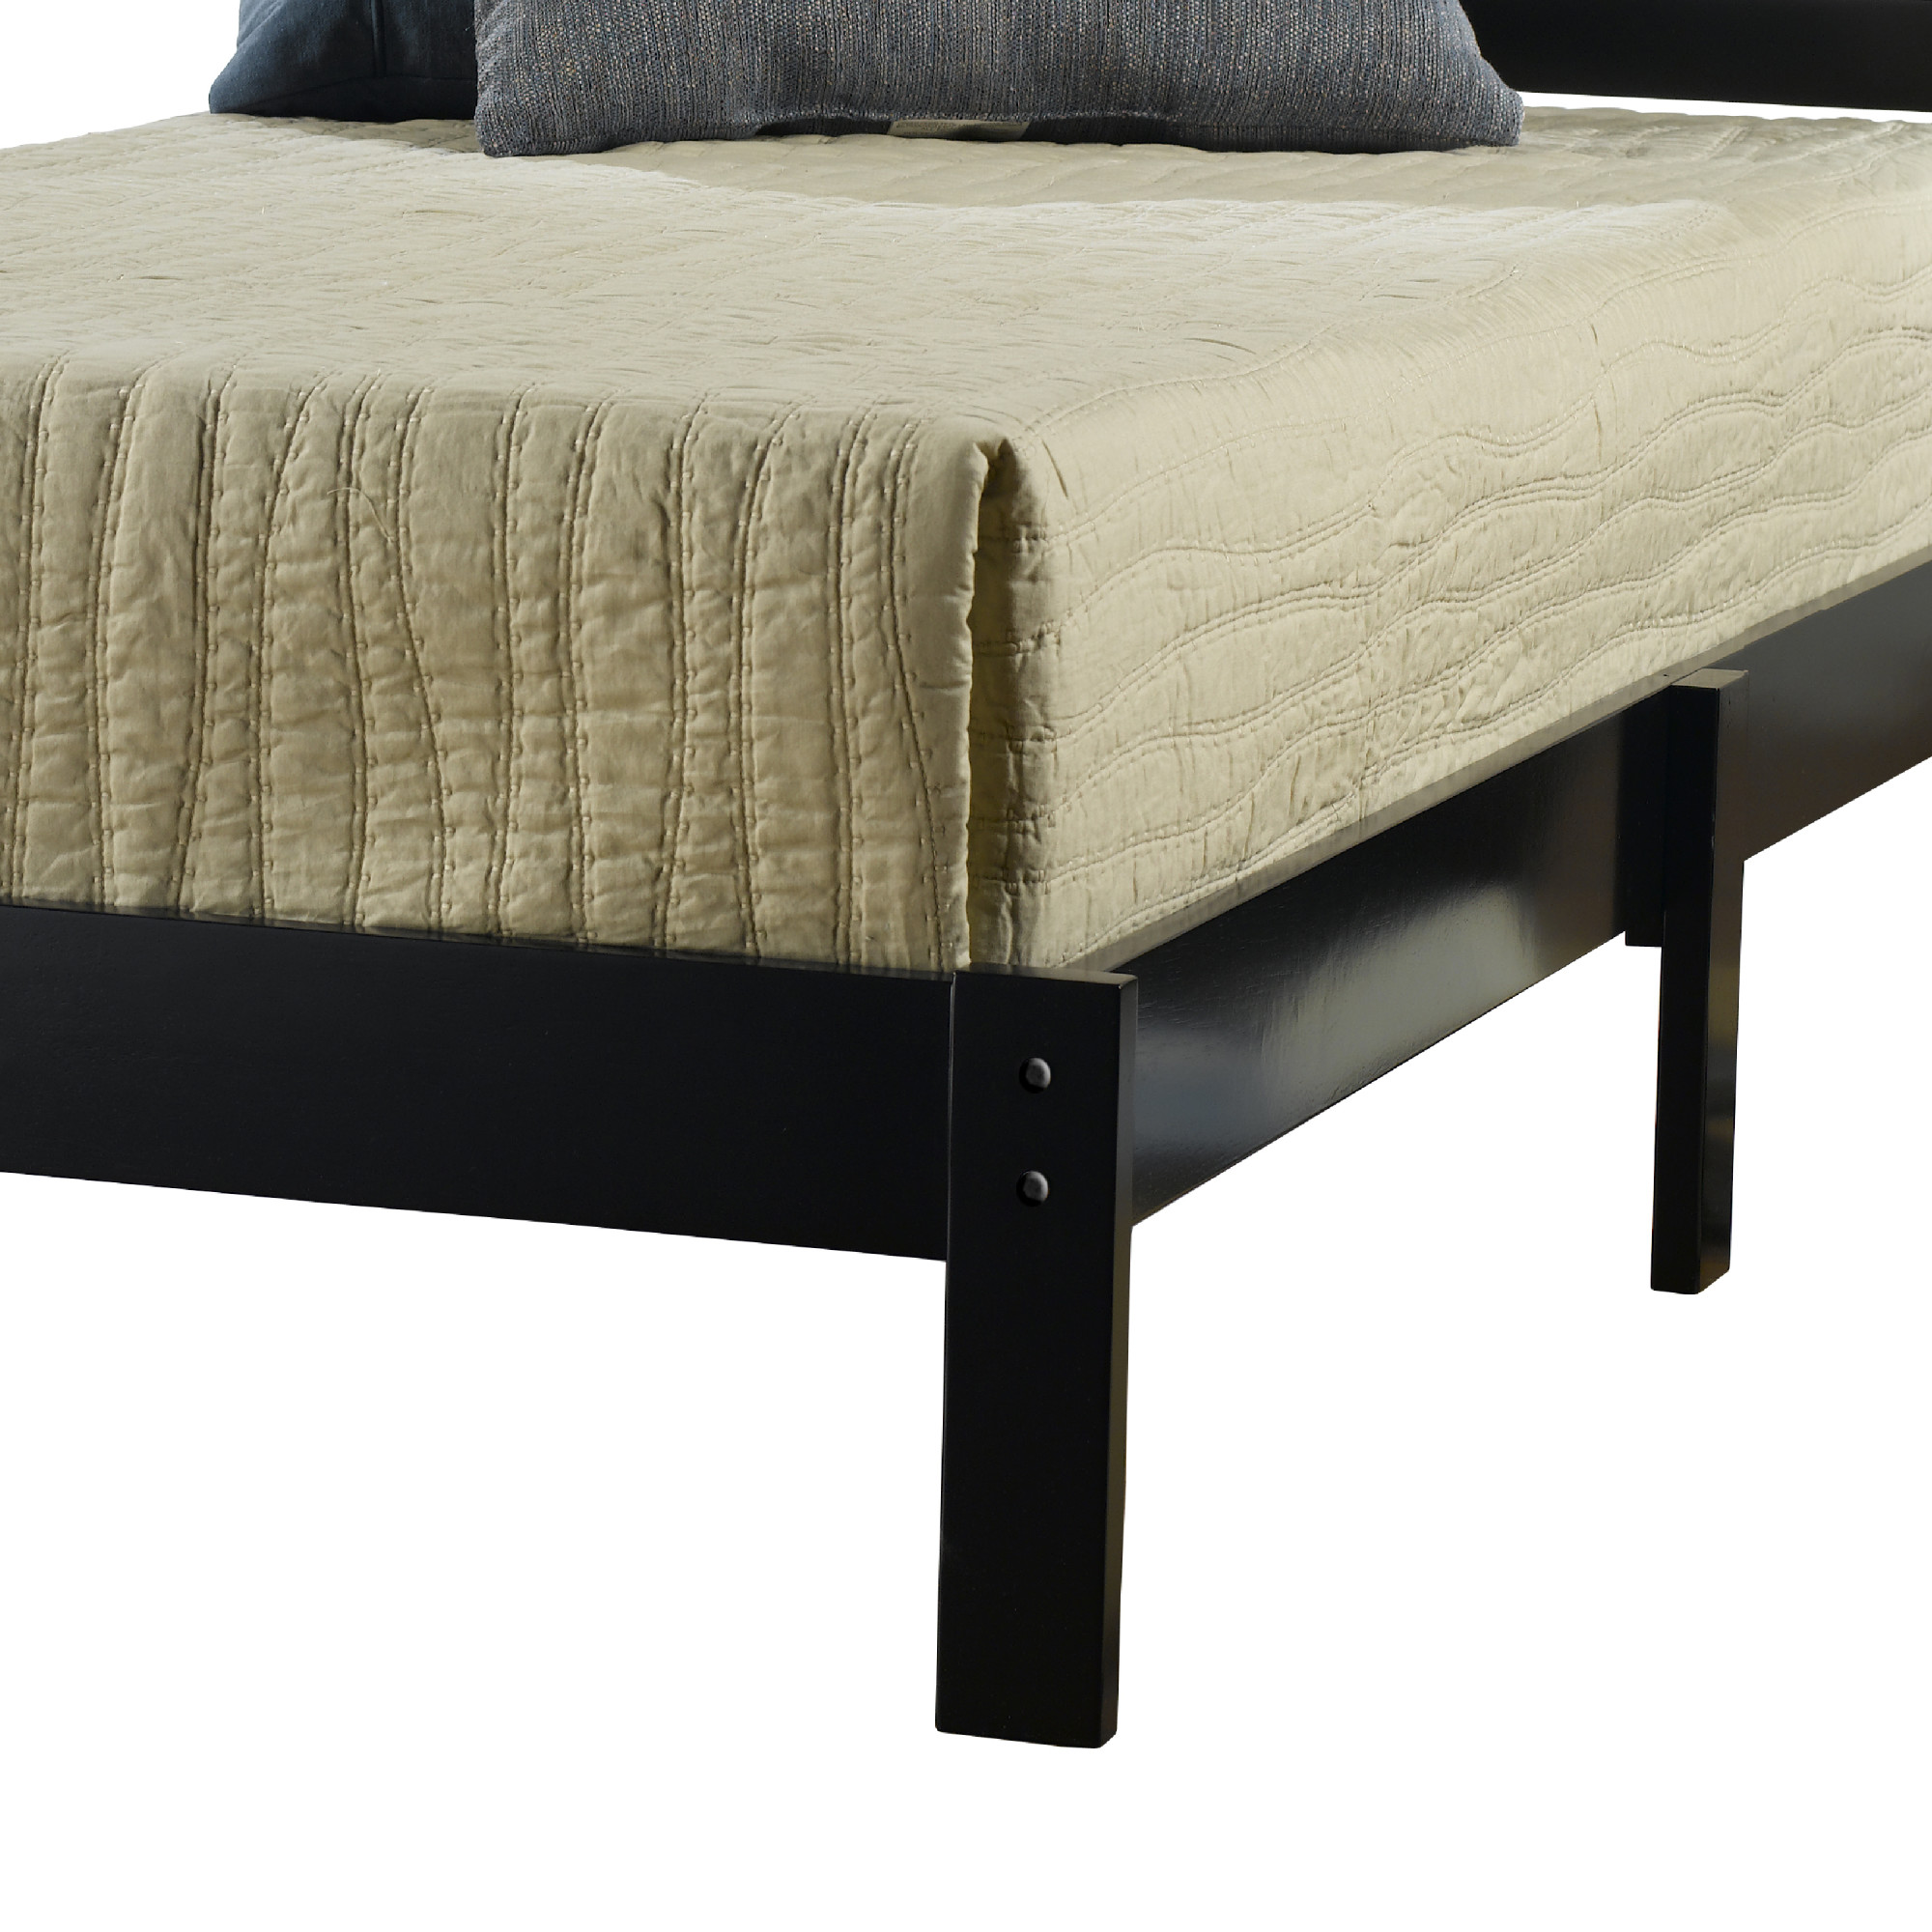 Hillsdale Furniture Aiden Low Profile Ladder Back Wood Platform Twin Bed, Black - image 4 of 6